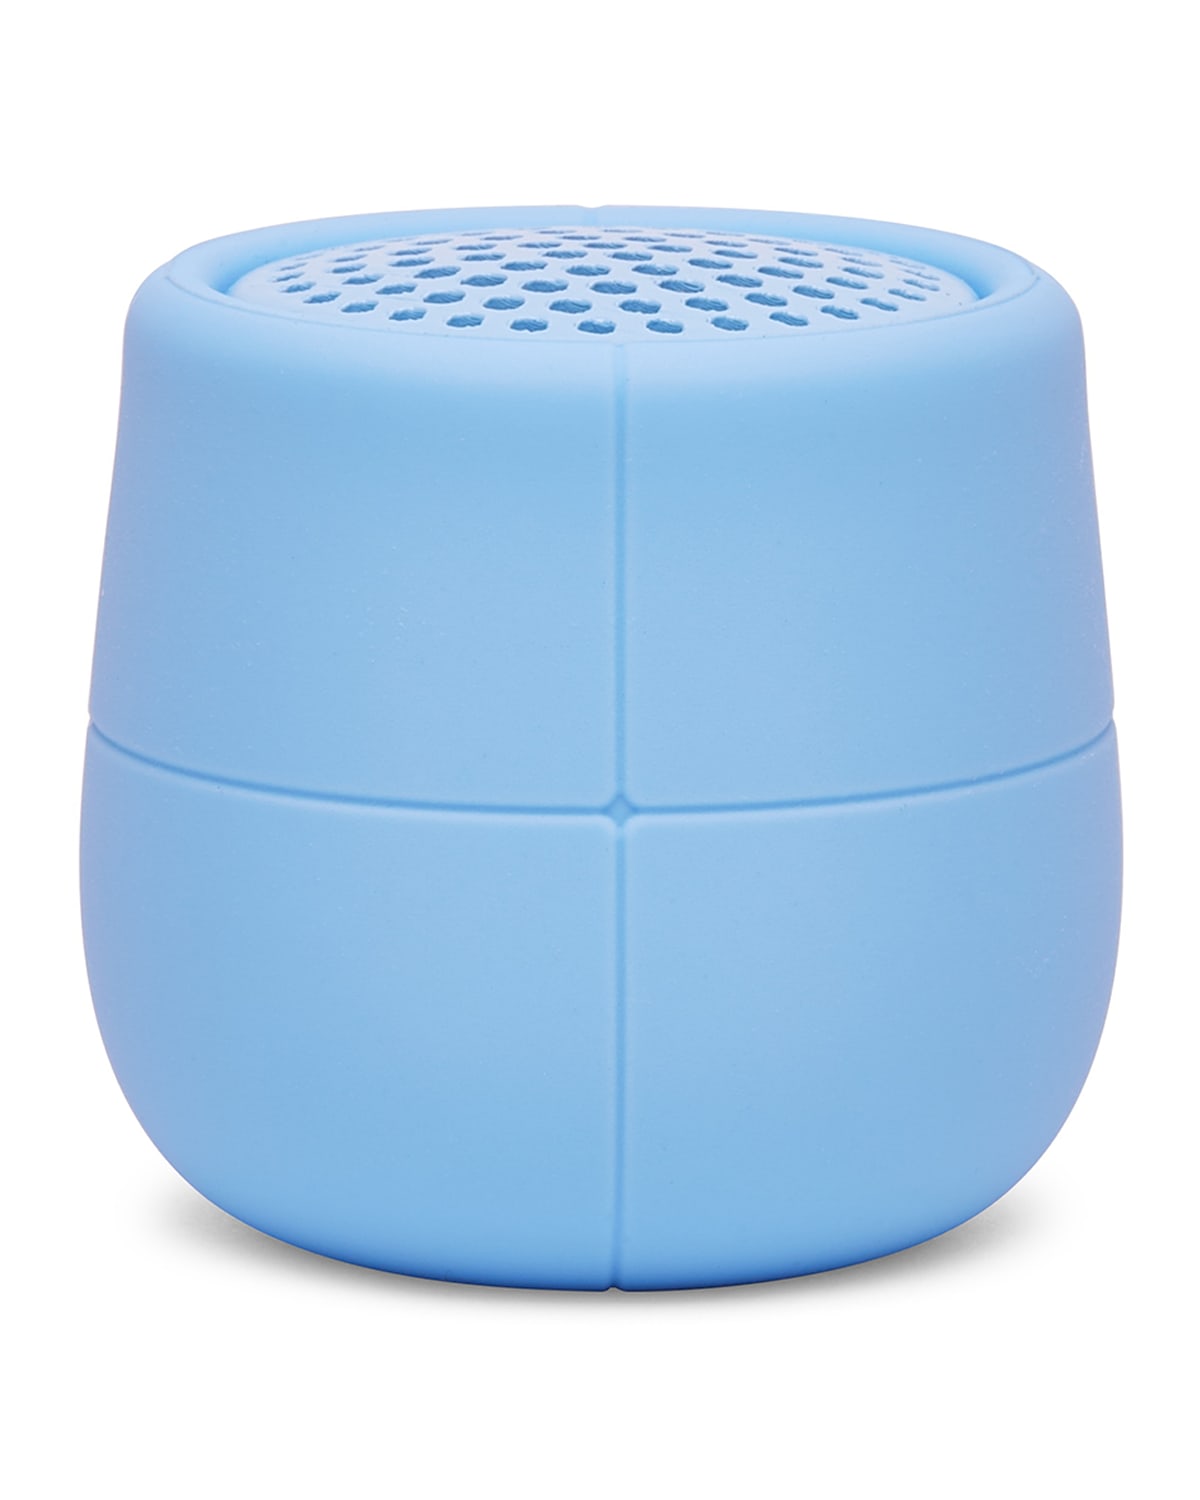 Lexon Design Mino X Water Resistant Floating Bluetooth Speaker